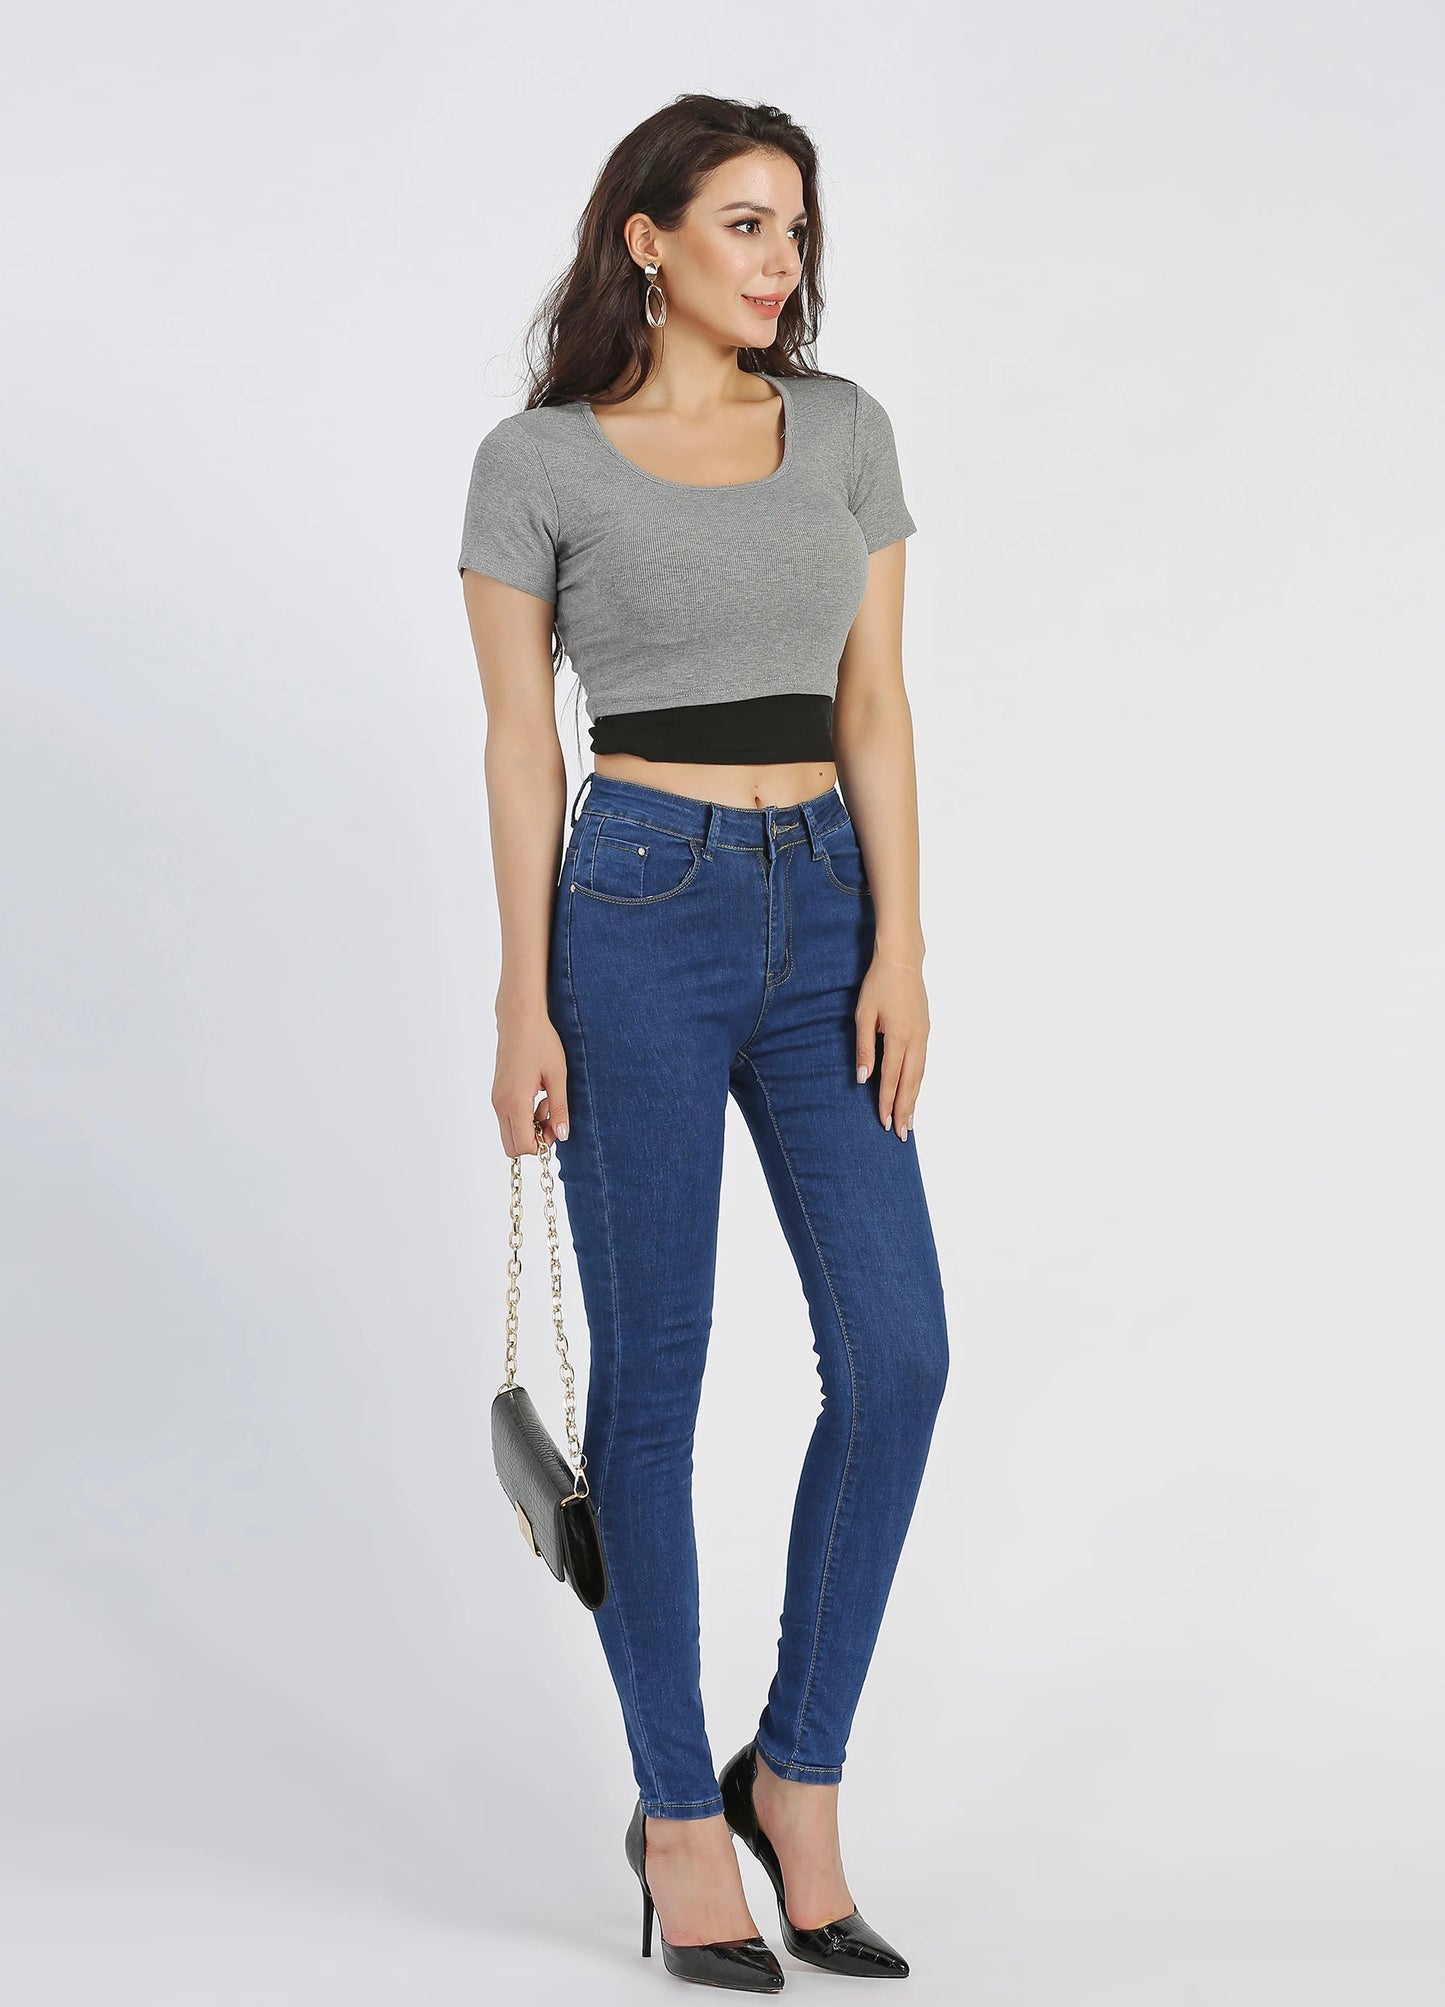 MECALA Women's High Waist Zip Closure Skinny Jeans-Dark Blue side view